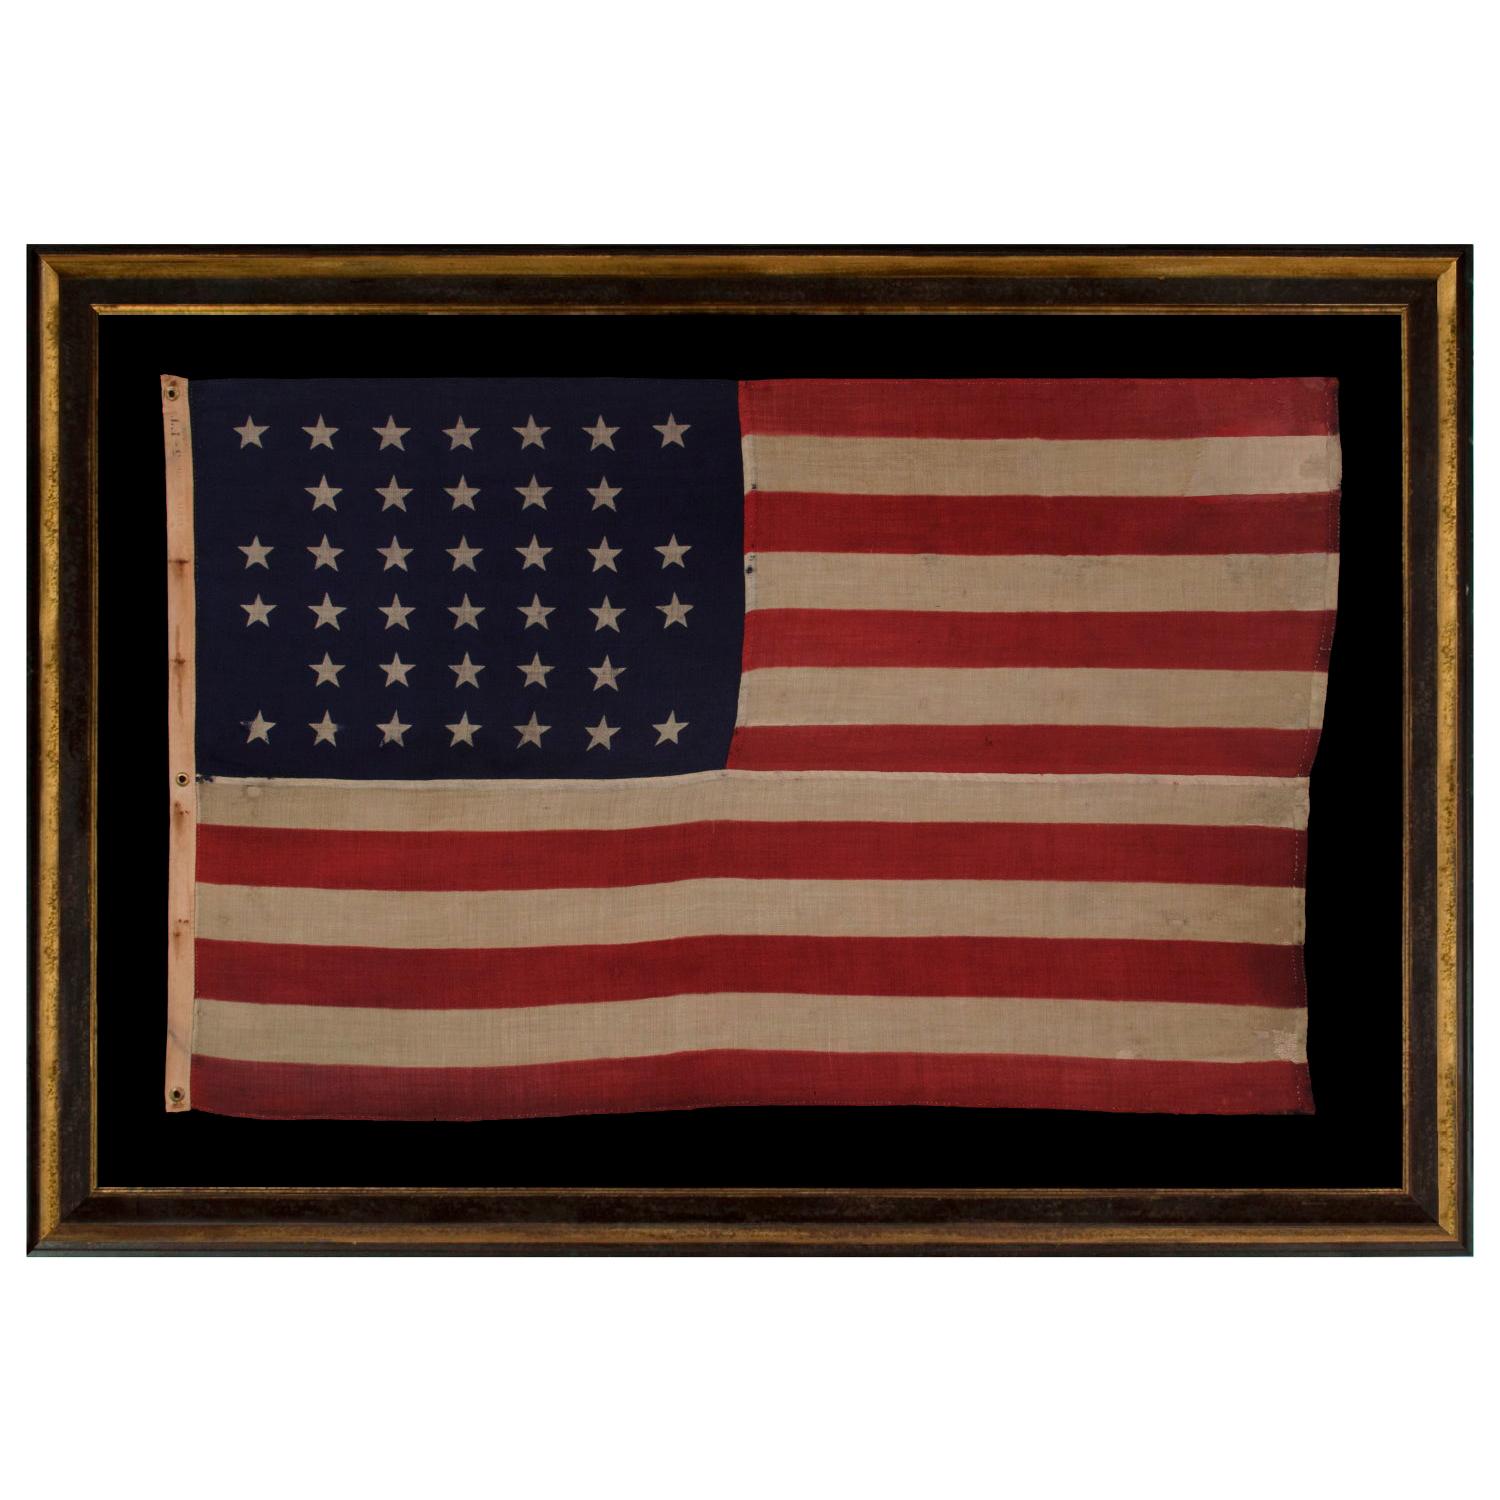 38 Stars American Flag Made by U.S Bunting Company, Lowell, Massachusetts